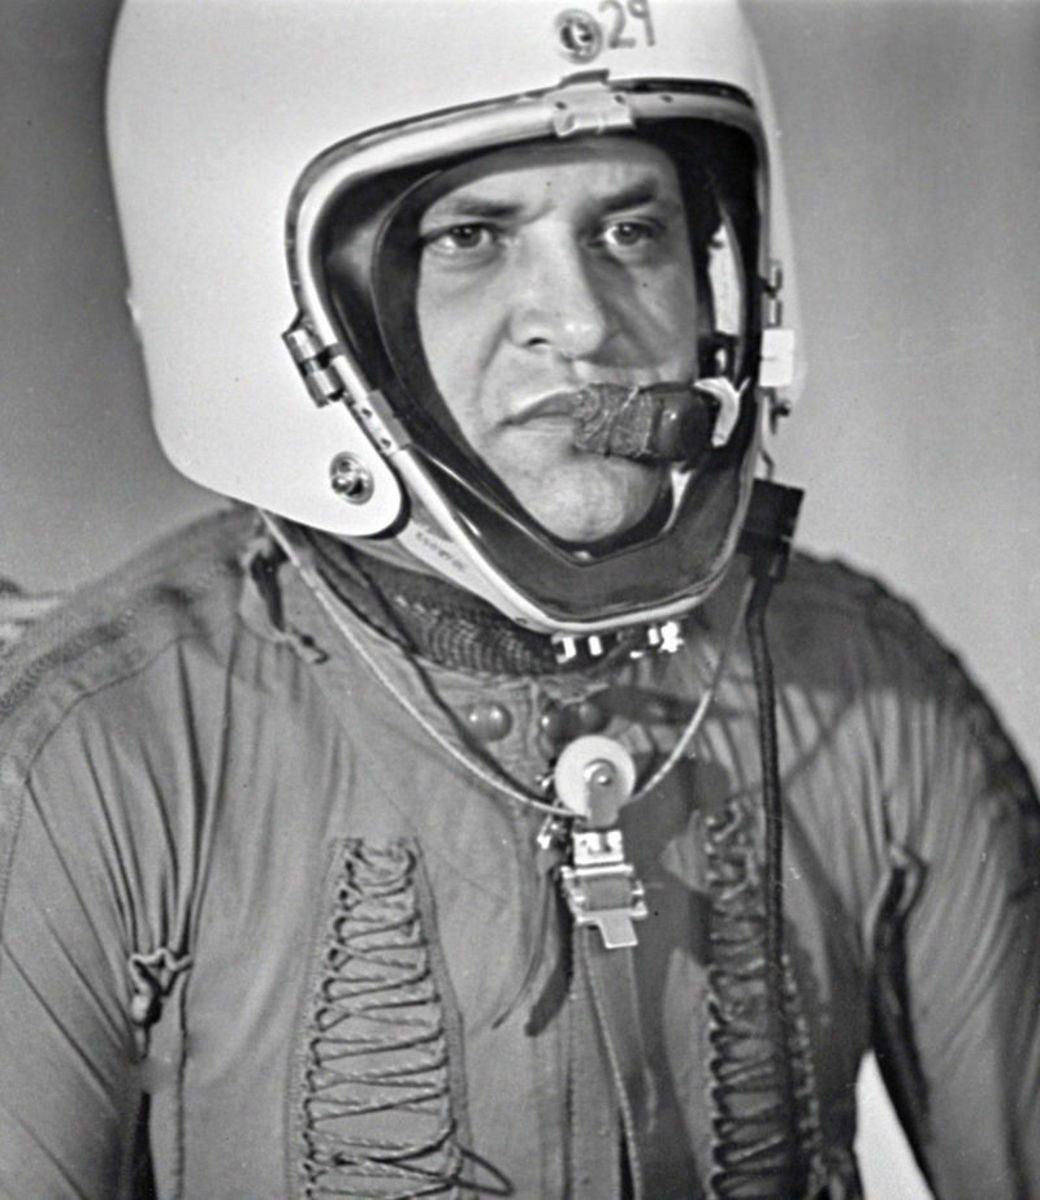 Powers in his pressurized U-2 flight suit.